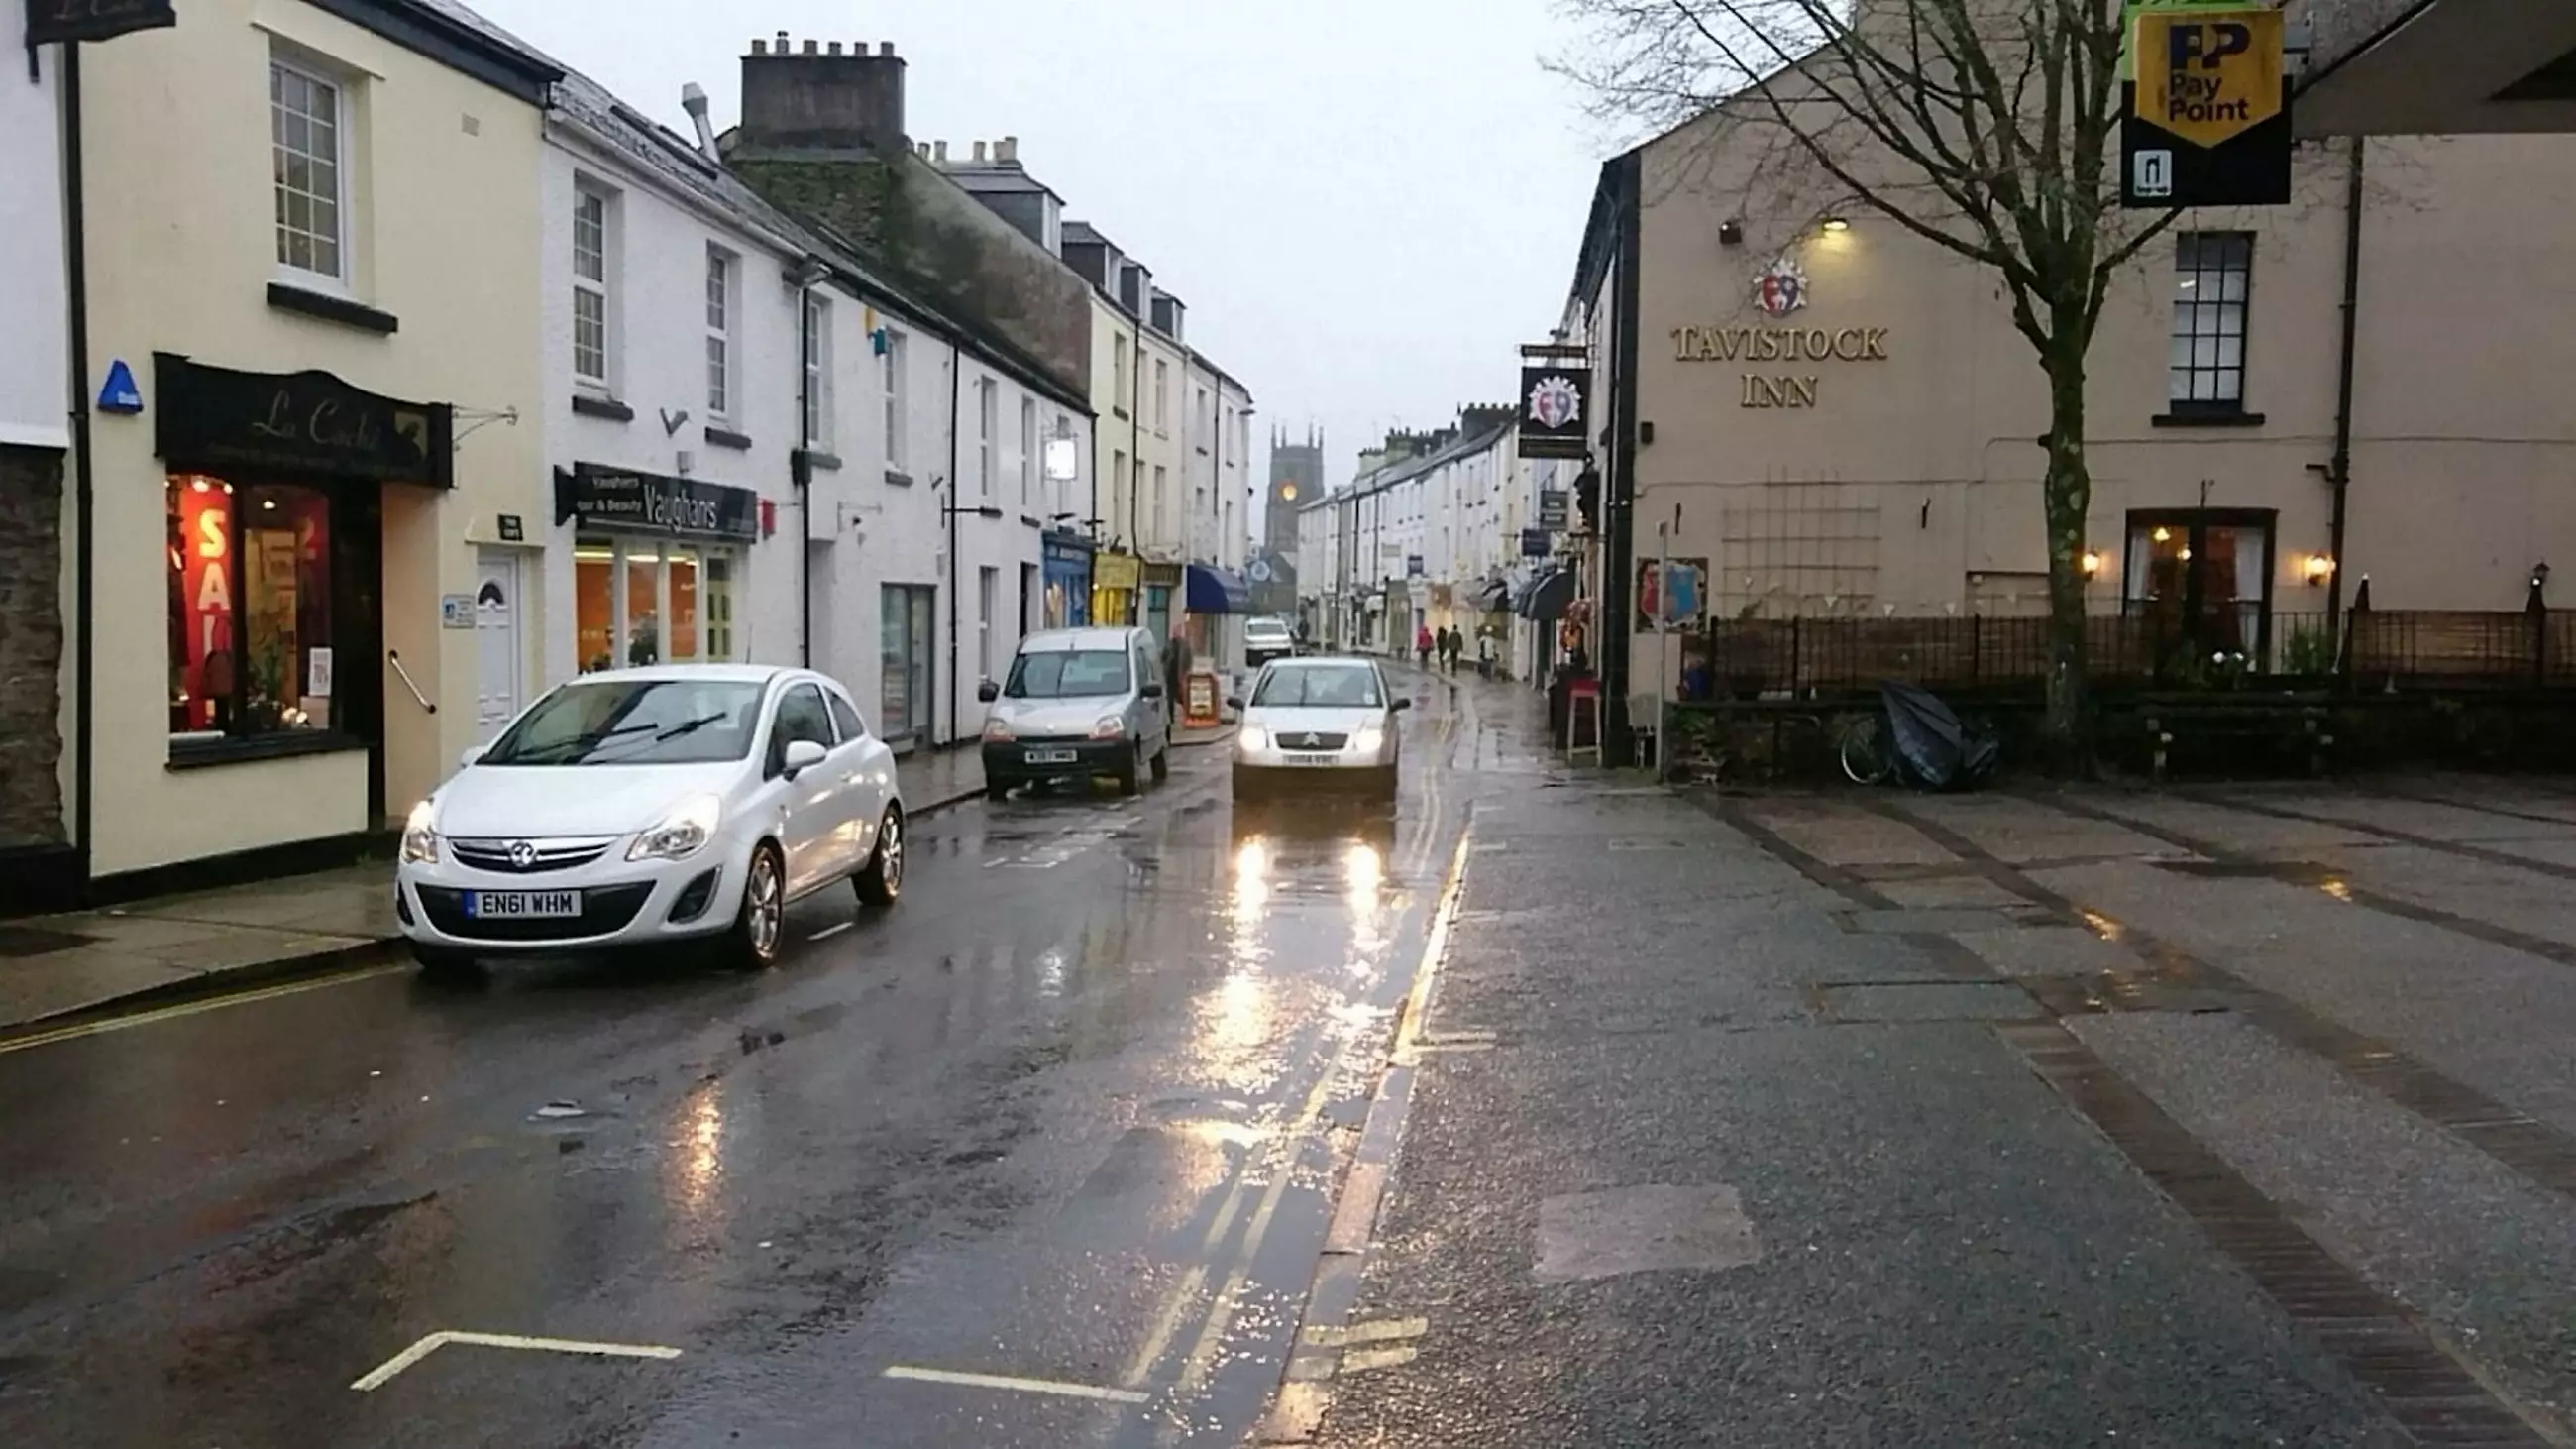 Tavistock in Devon was dubbed the 'angriest town'.